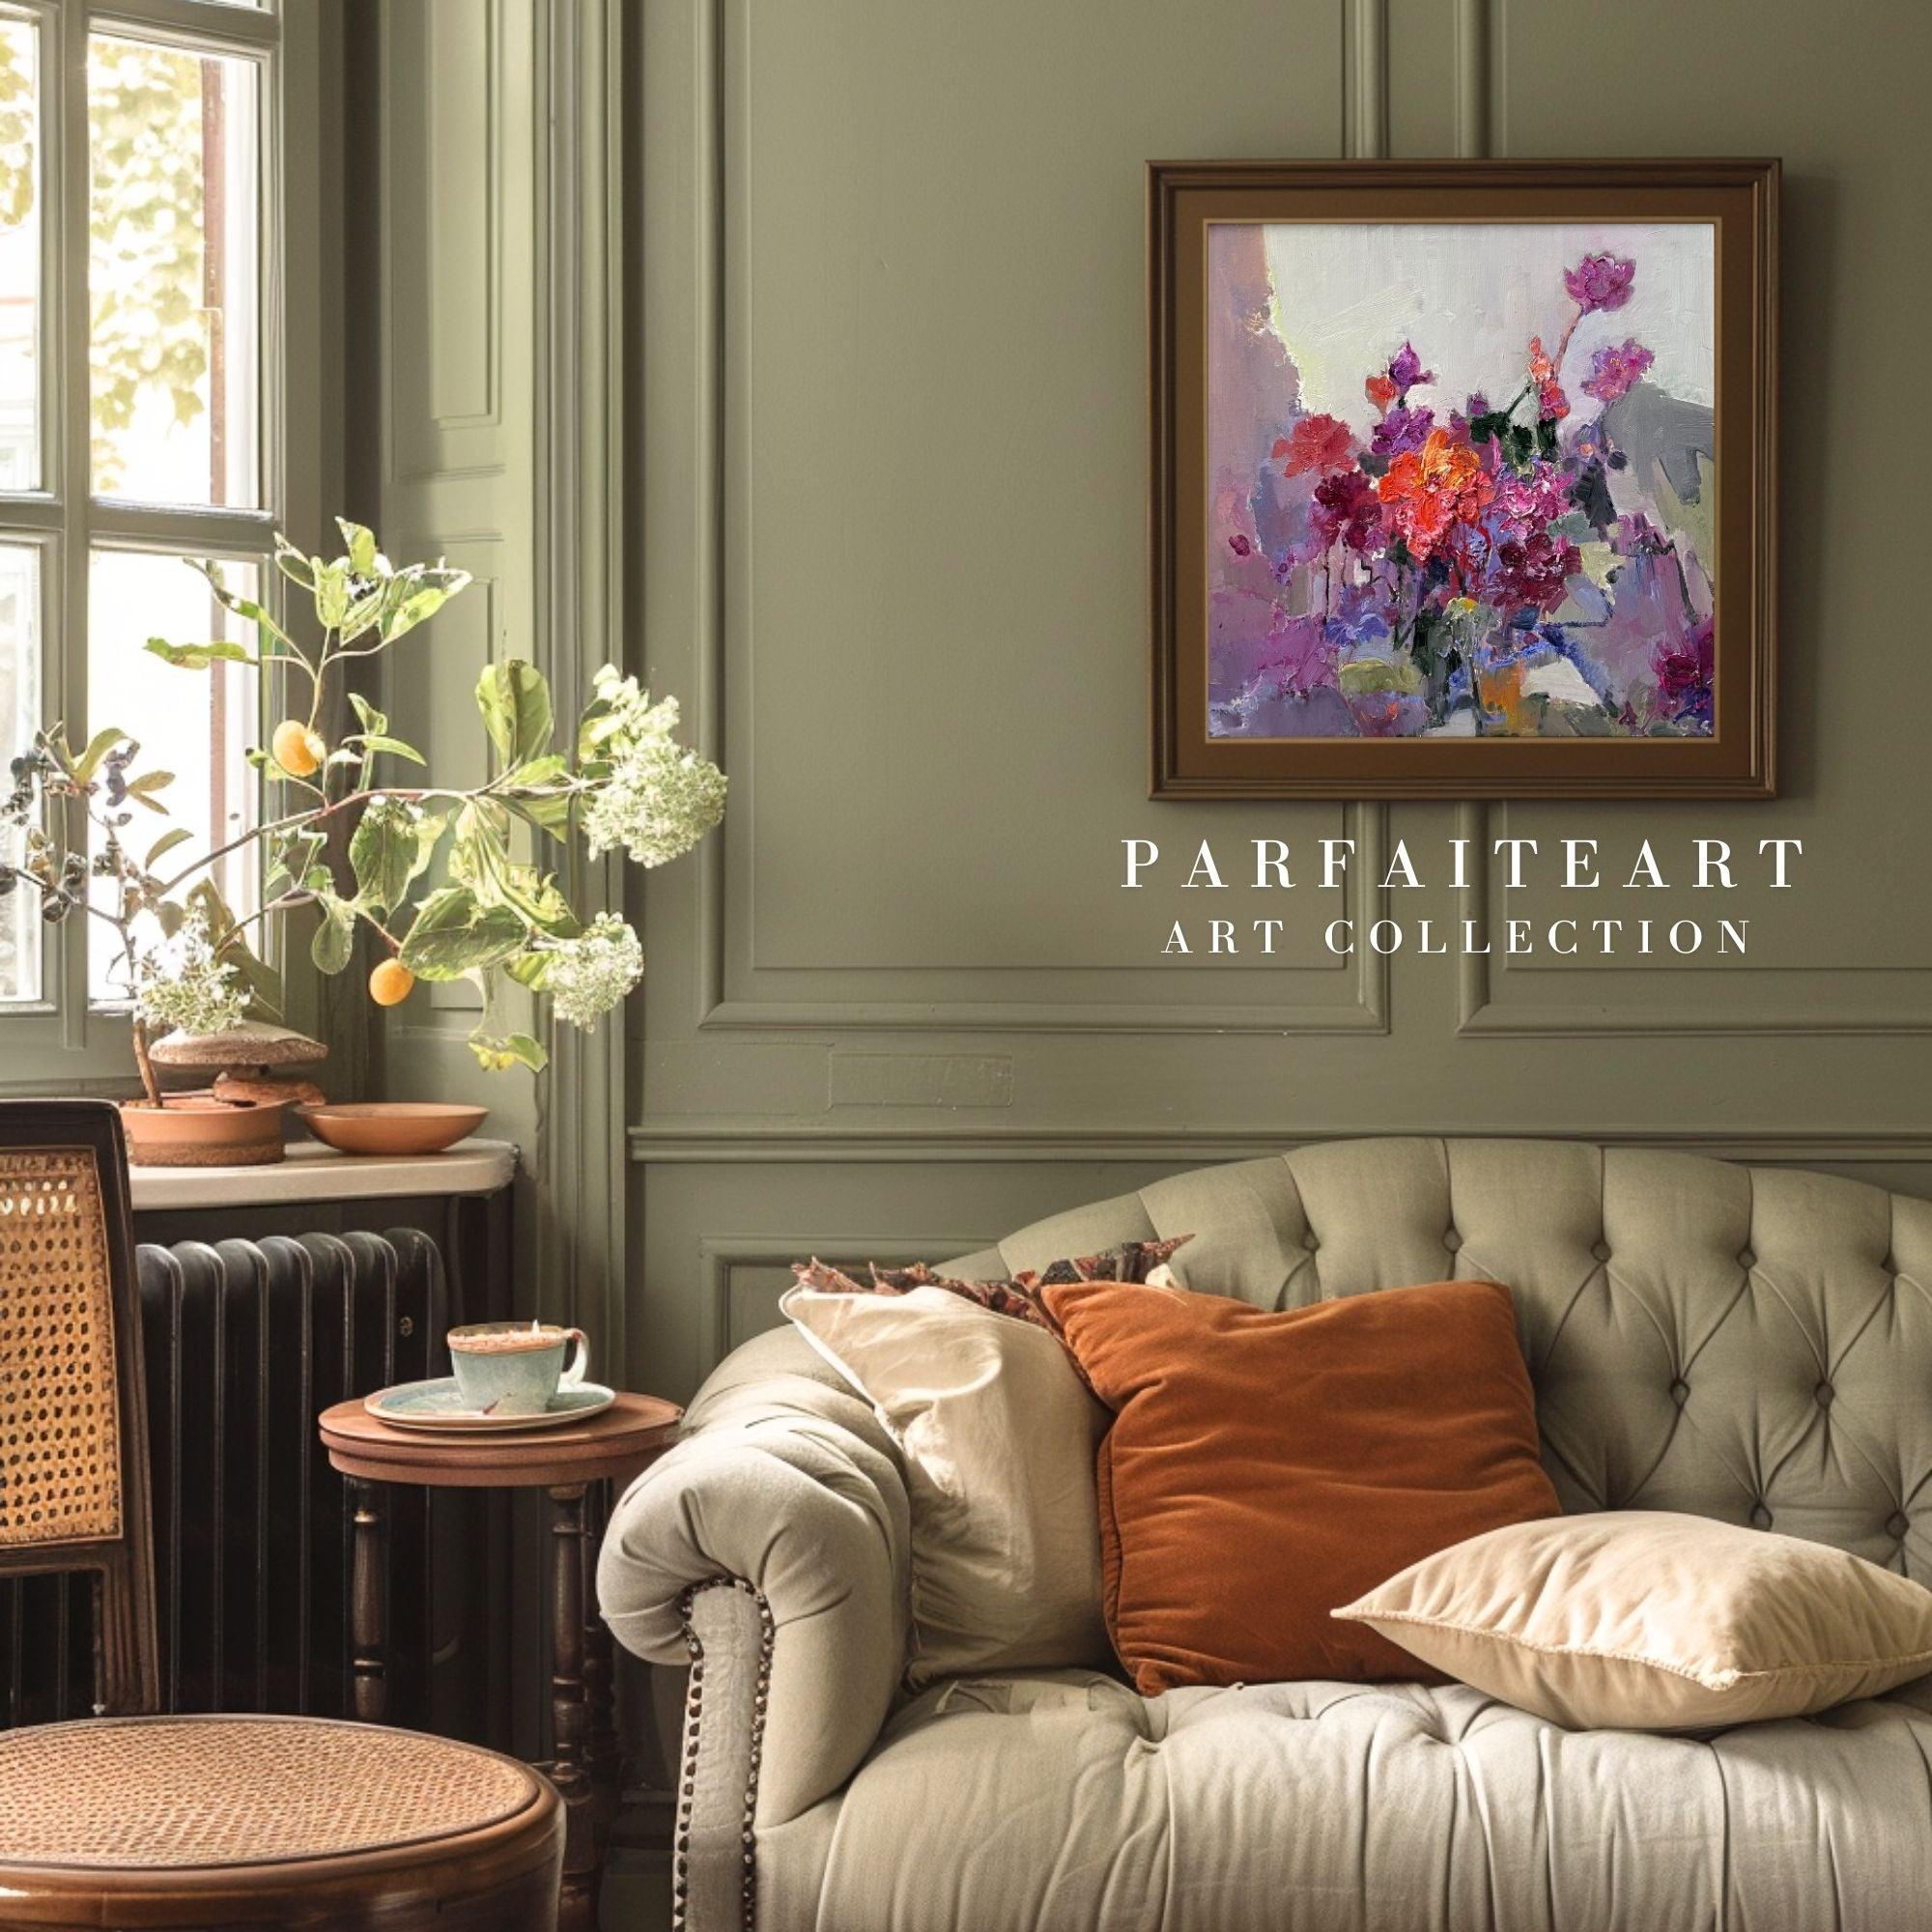 Original Painting,Handmade,Canvas Print,Abstract Art,Botany,Art Decor For Living Room O11 - ParfaiteArt